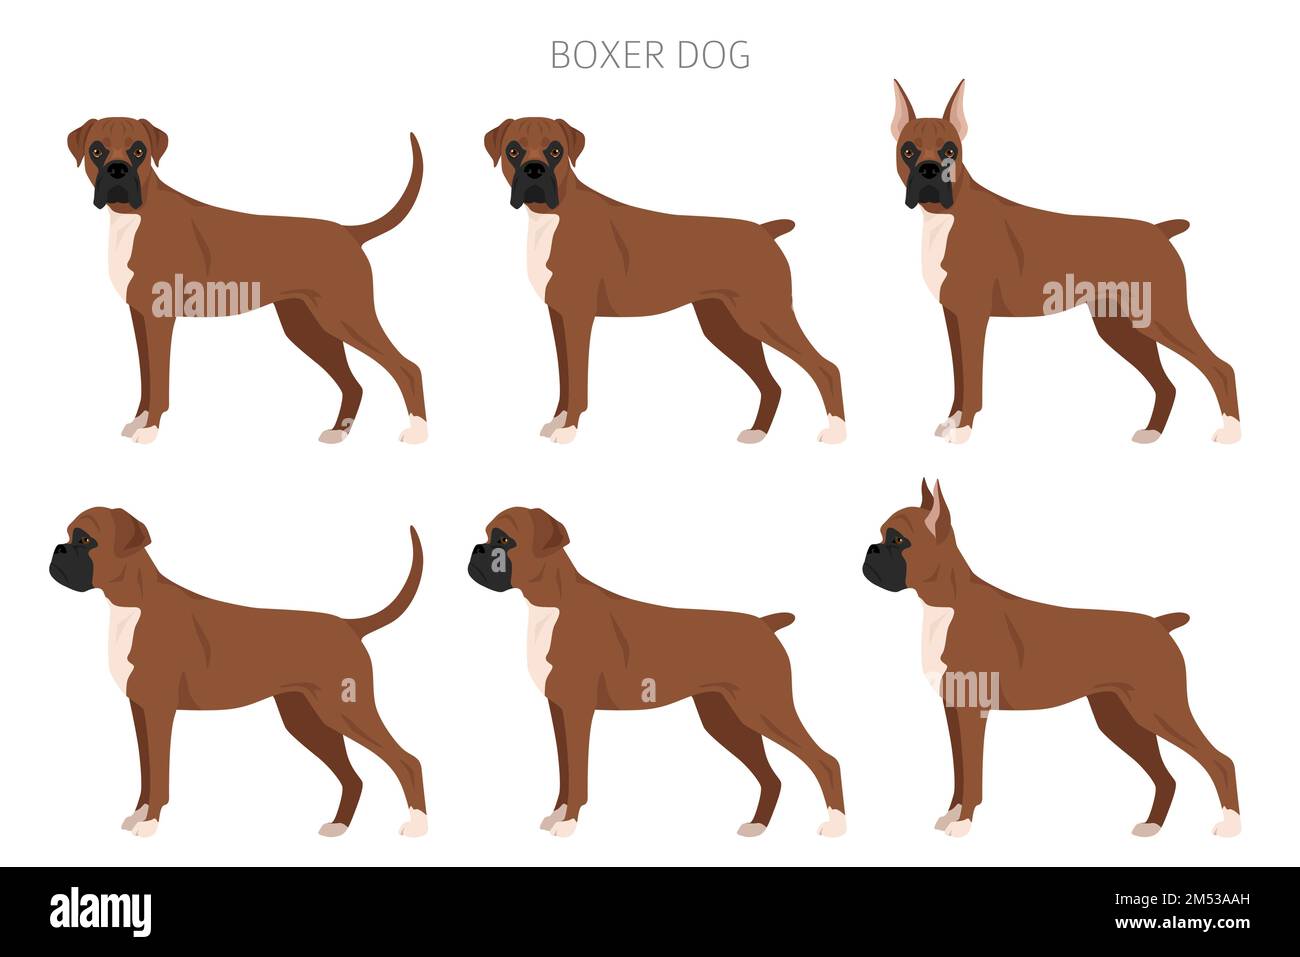 Boxer-Dog-Clipart. Alle Mantelfarben eingestellt. Andere Position. Infografik zu den Merkmalen aller Hunderassen. Vektordarstellung Stock Vektor